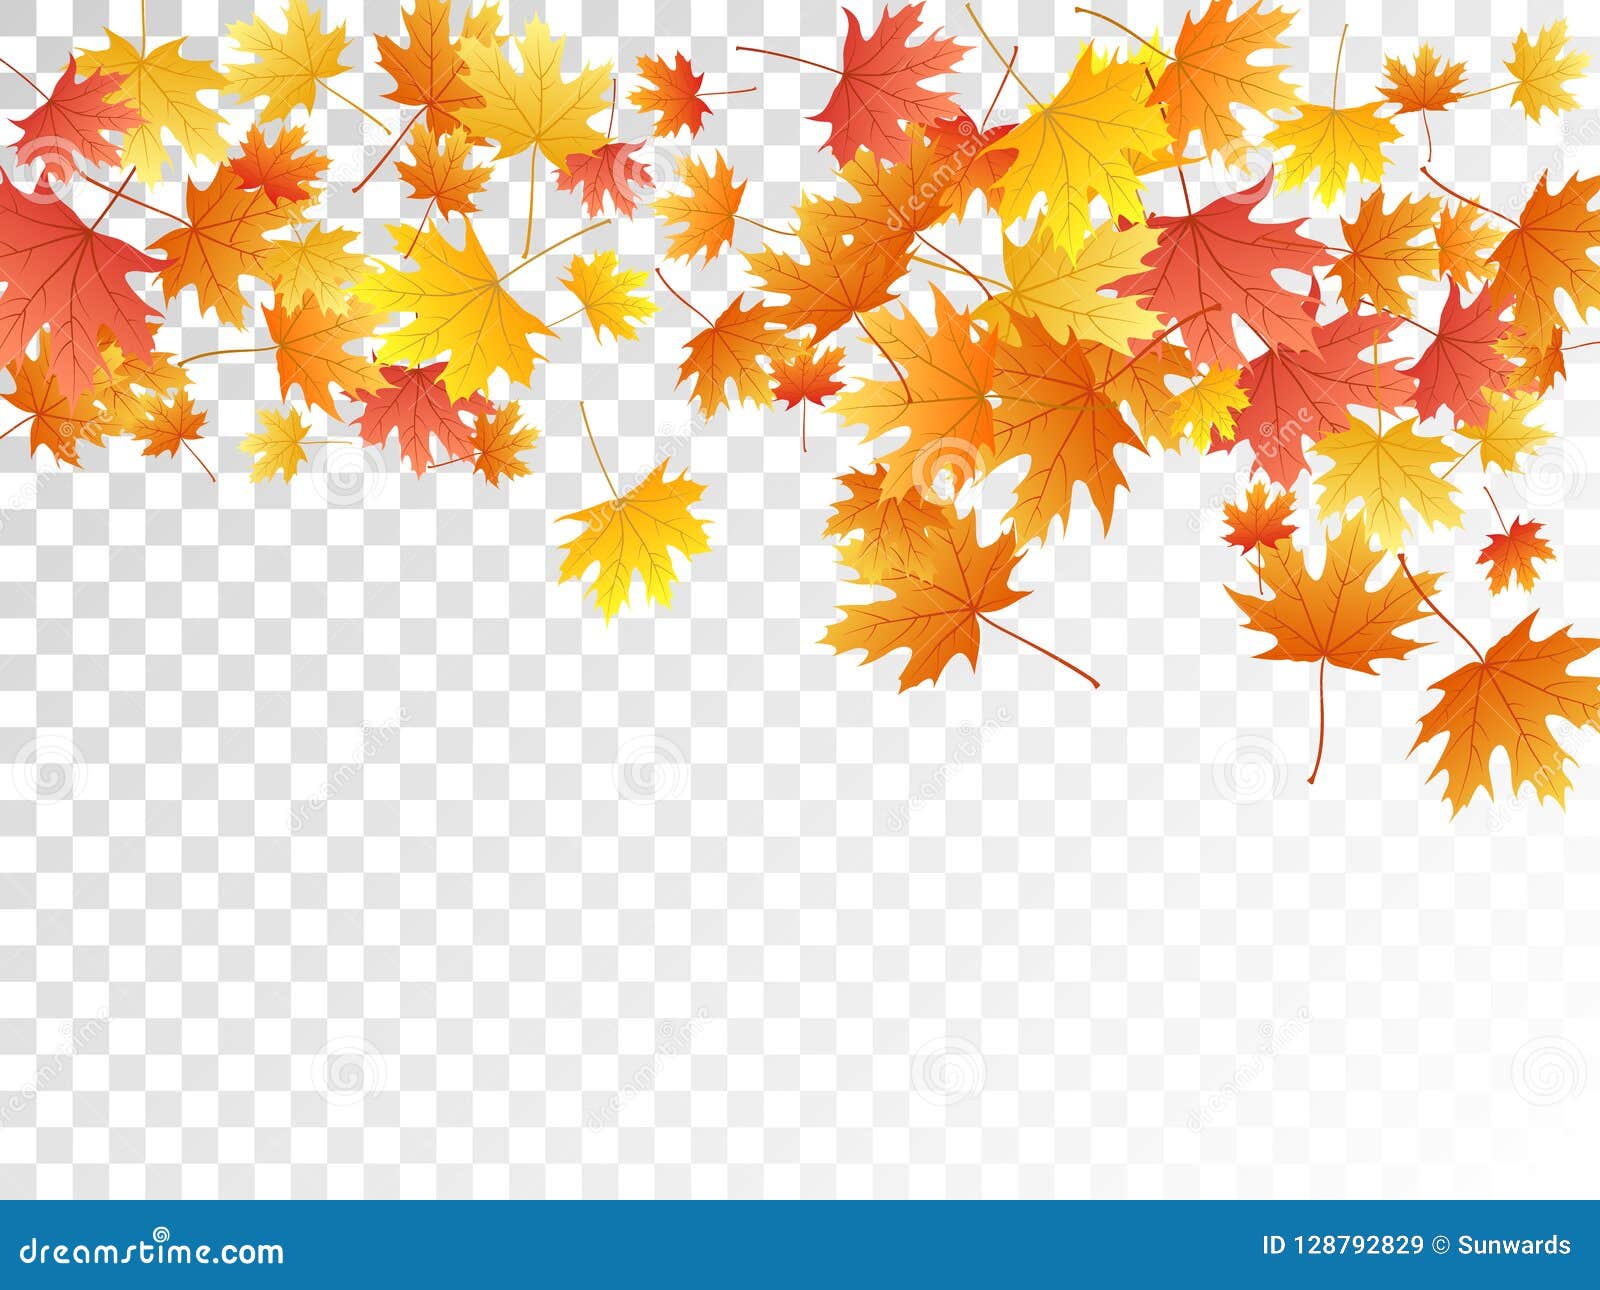 Maple Leaves Vector Illustration, Autumn Foliage on Transparent Background.  Stock Vector - Illustration of flora, garden: 128792829